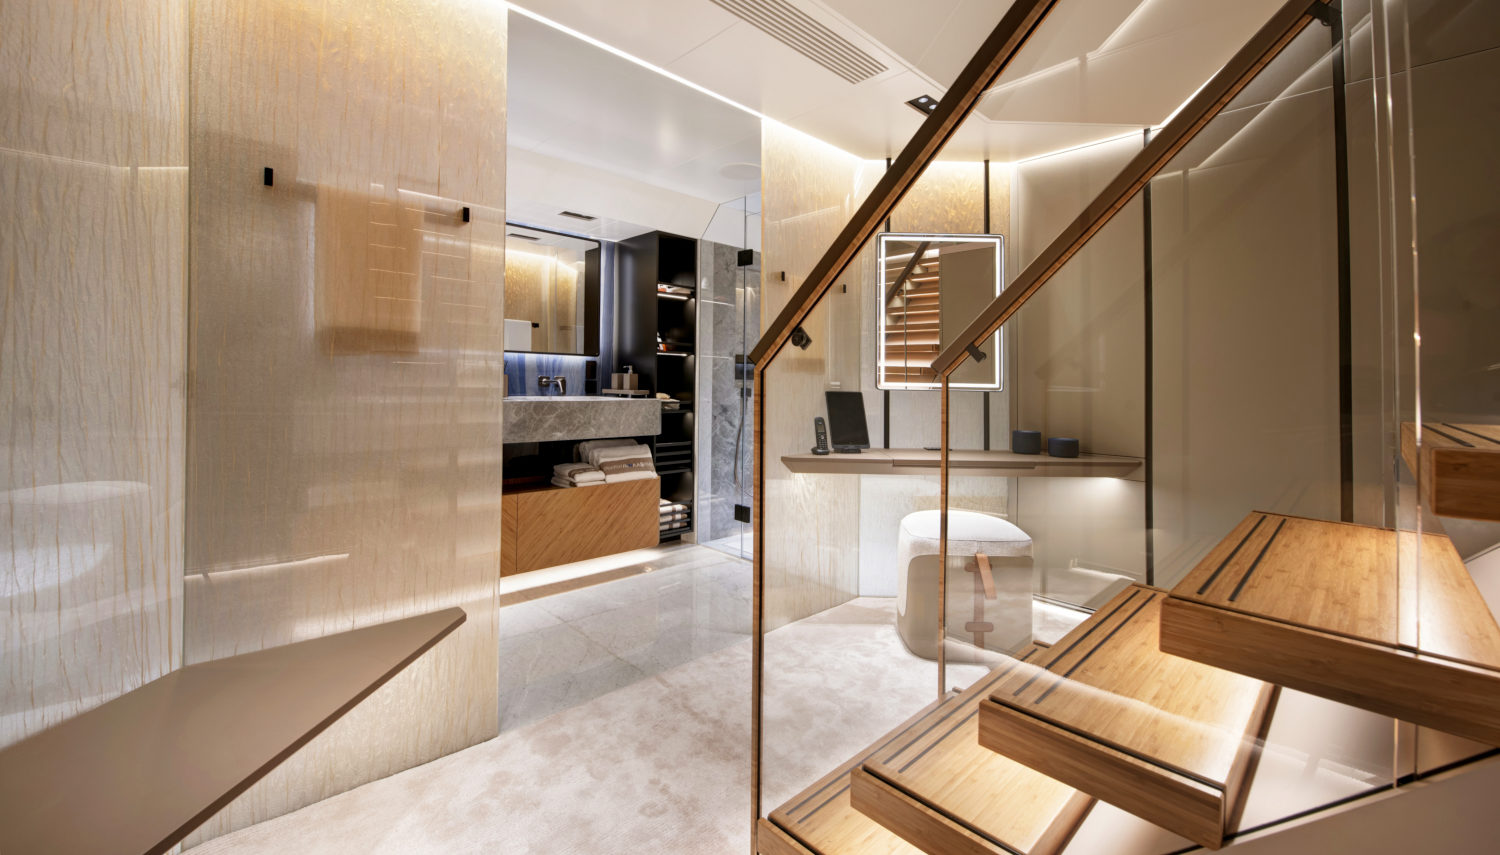 Al Waab - 55m superyacht - Interior Design - Master Bathroom